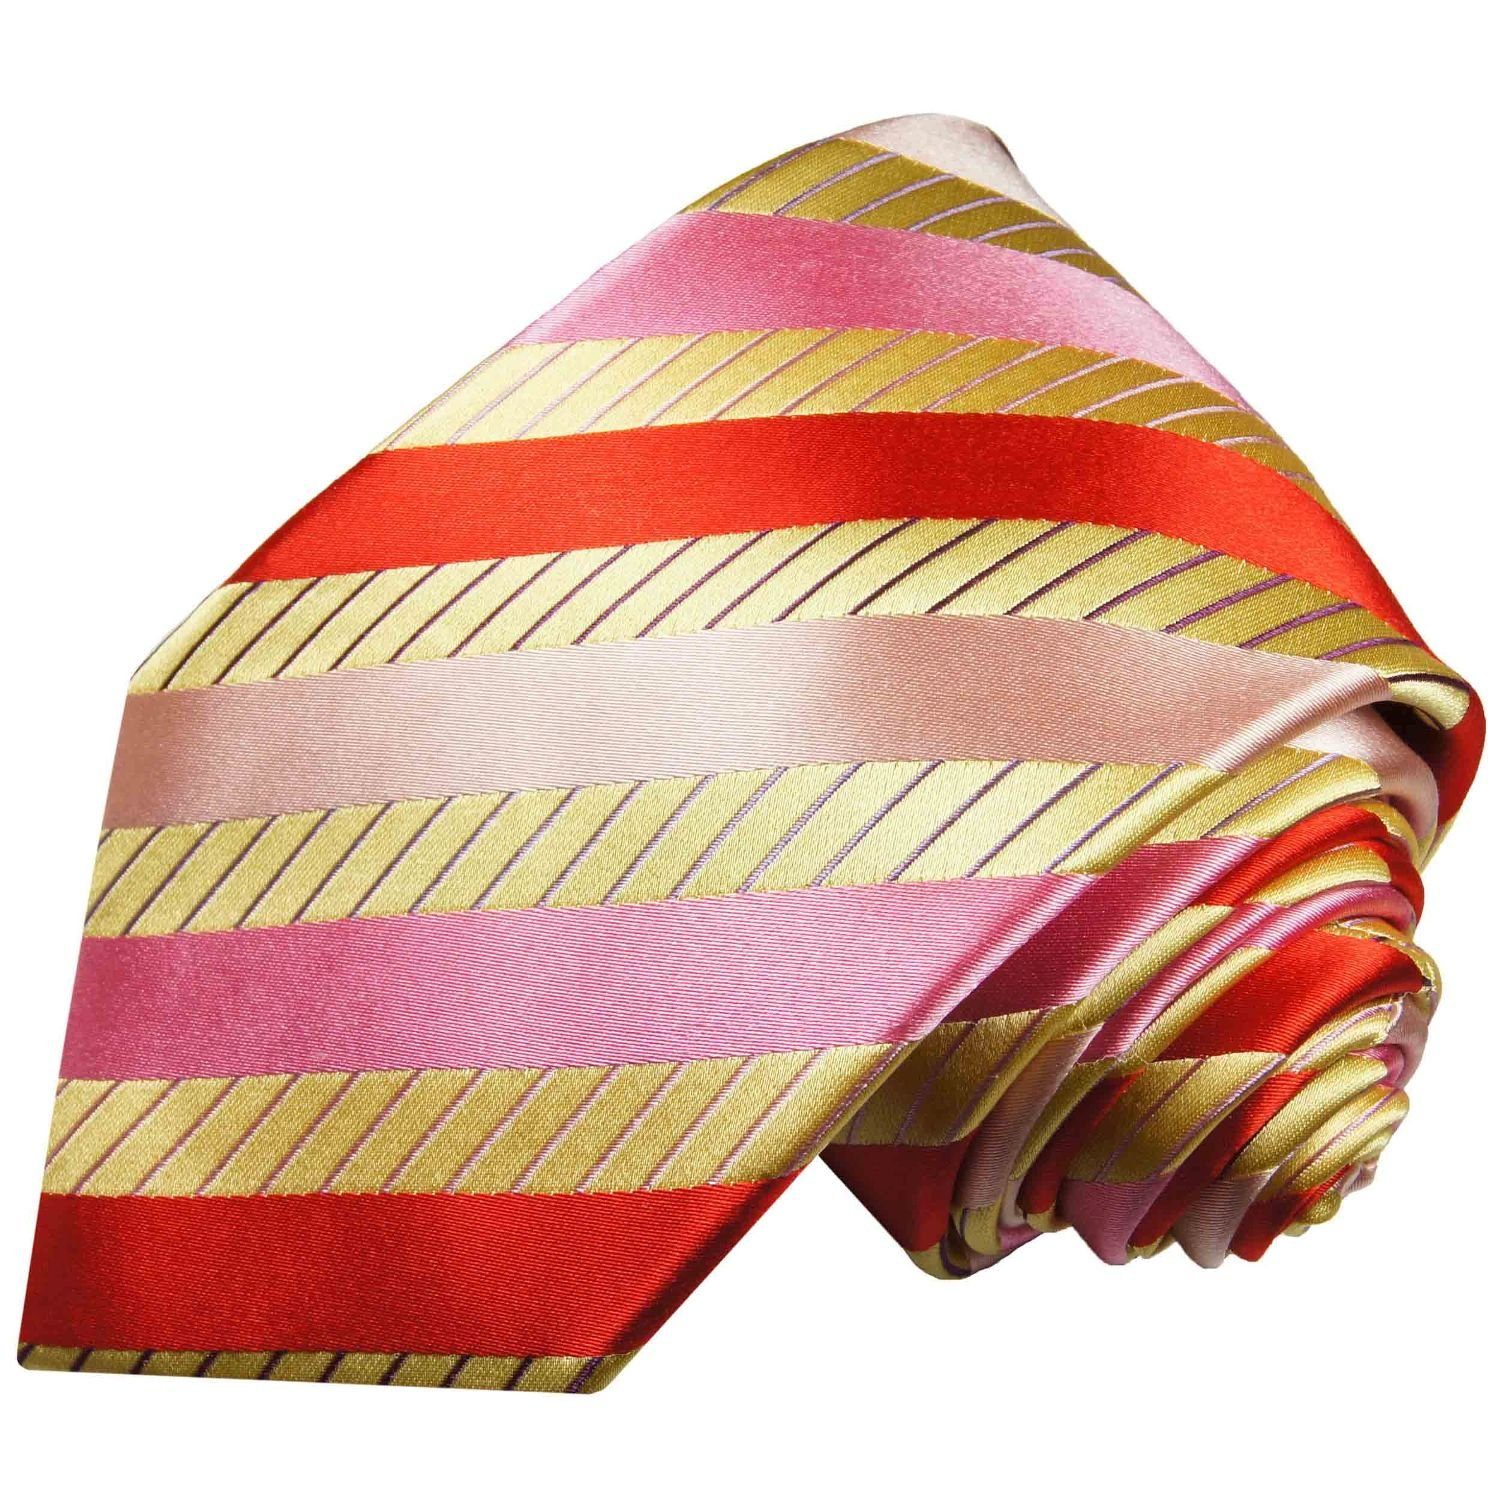 Paul Malone Krawatte Designer Seidenkrawatte Herren Schlips modern gestreift 100% Seide Breit (8cm), gold rot pink 620